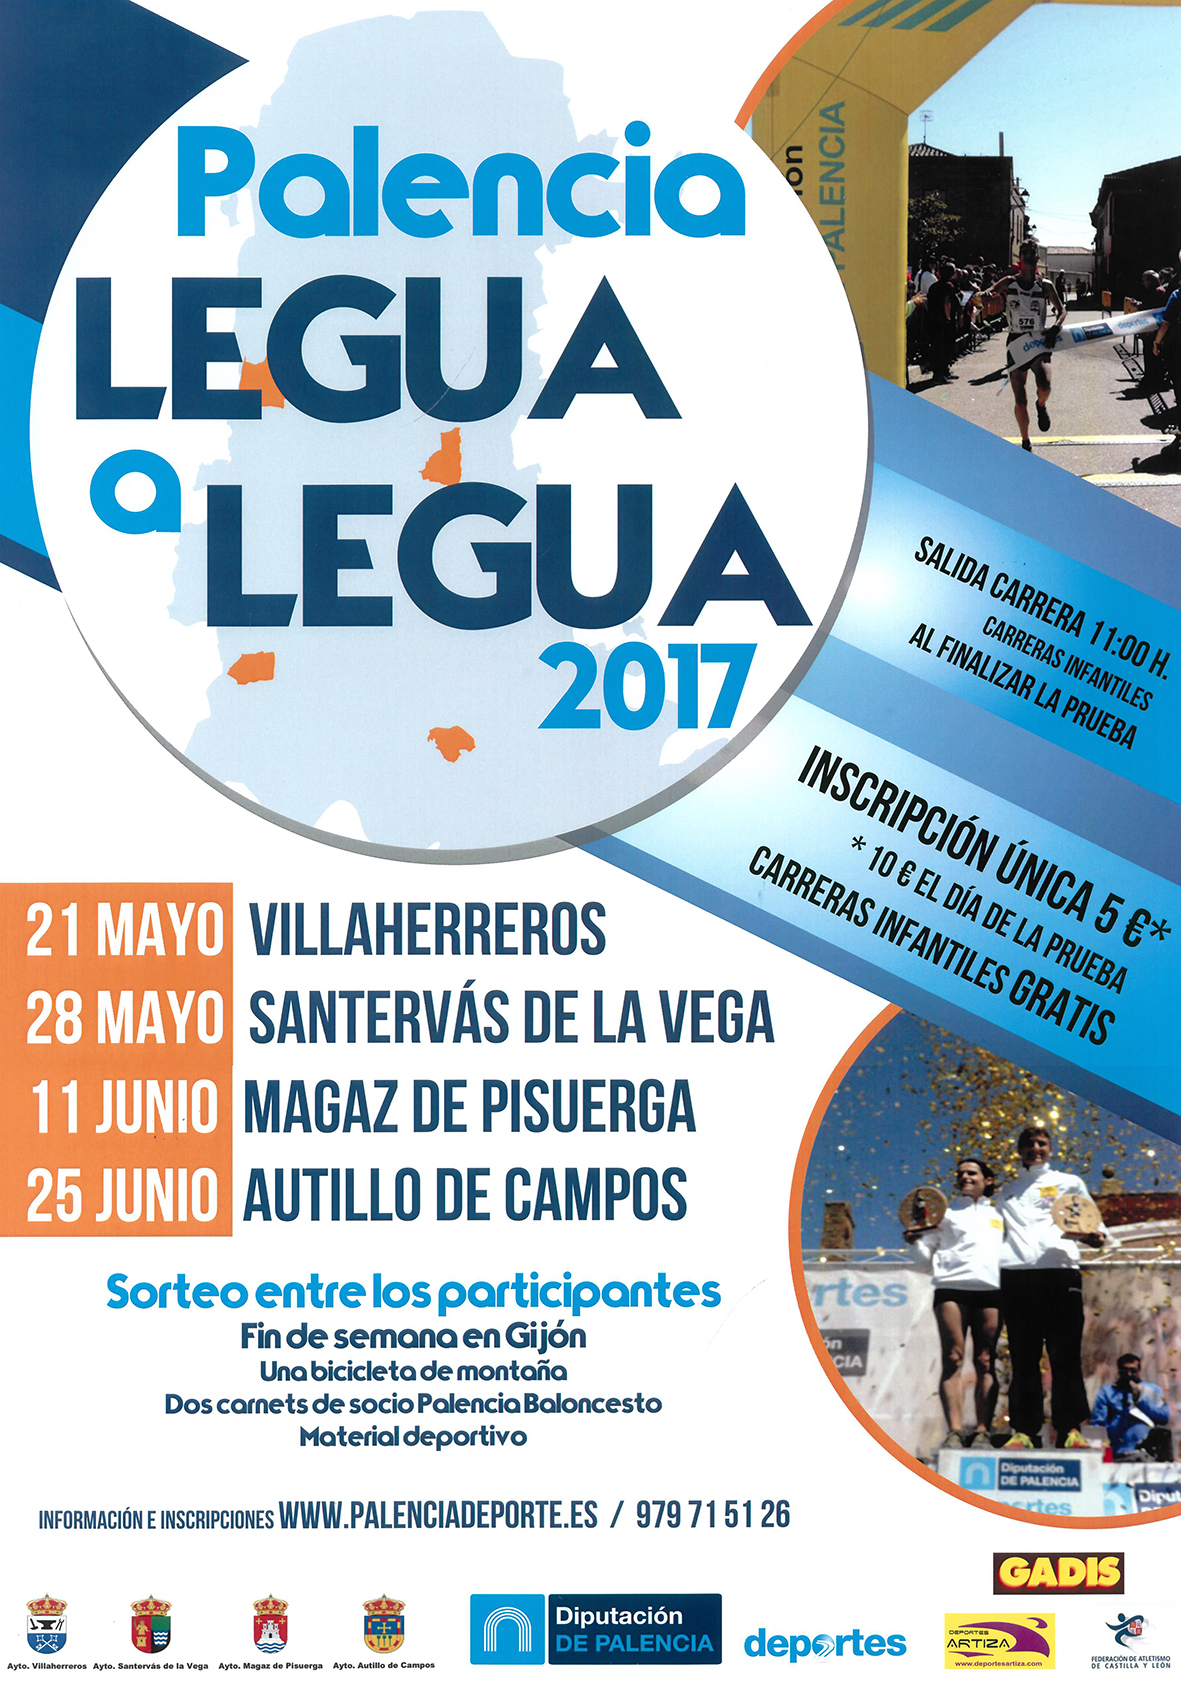 Palencia Legua a Legua 2017